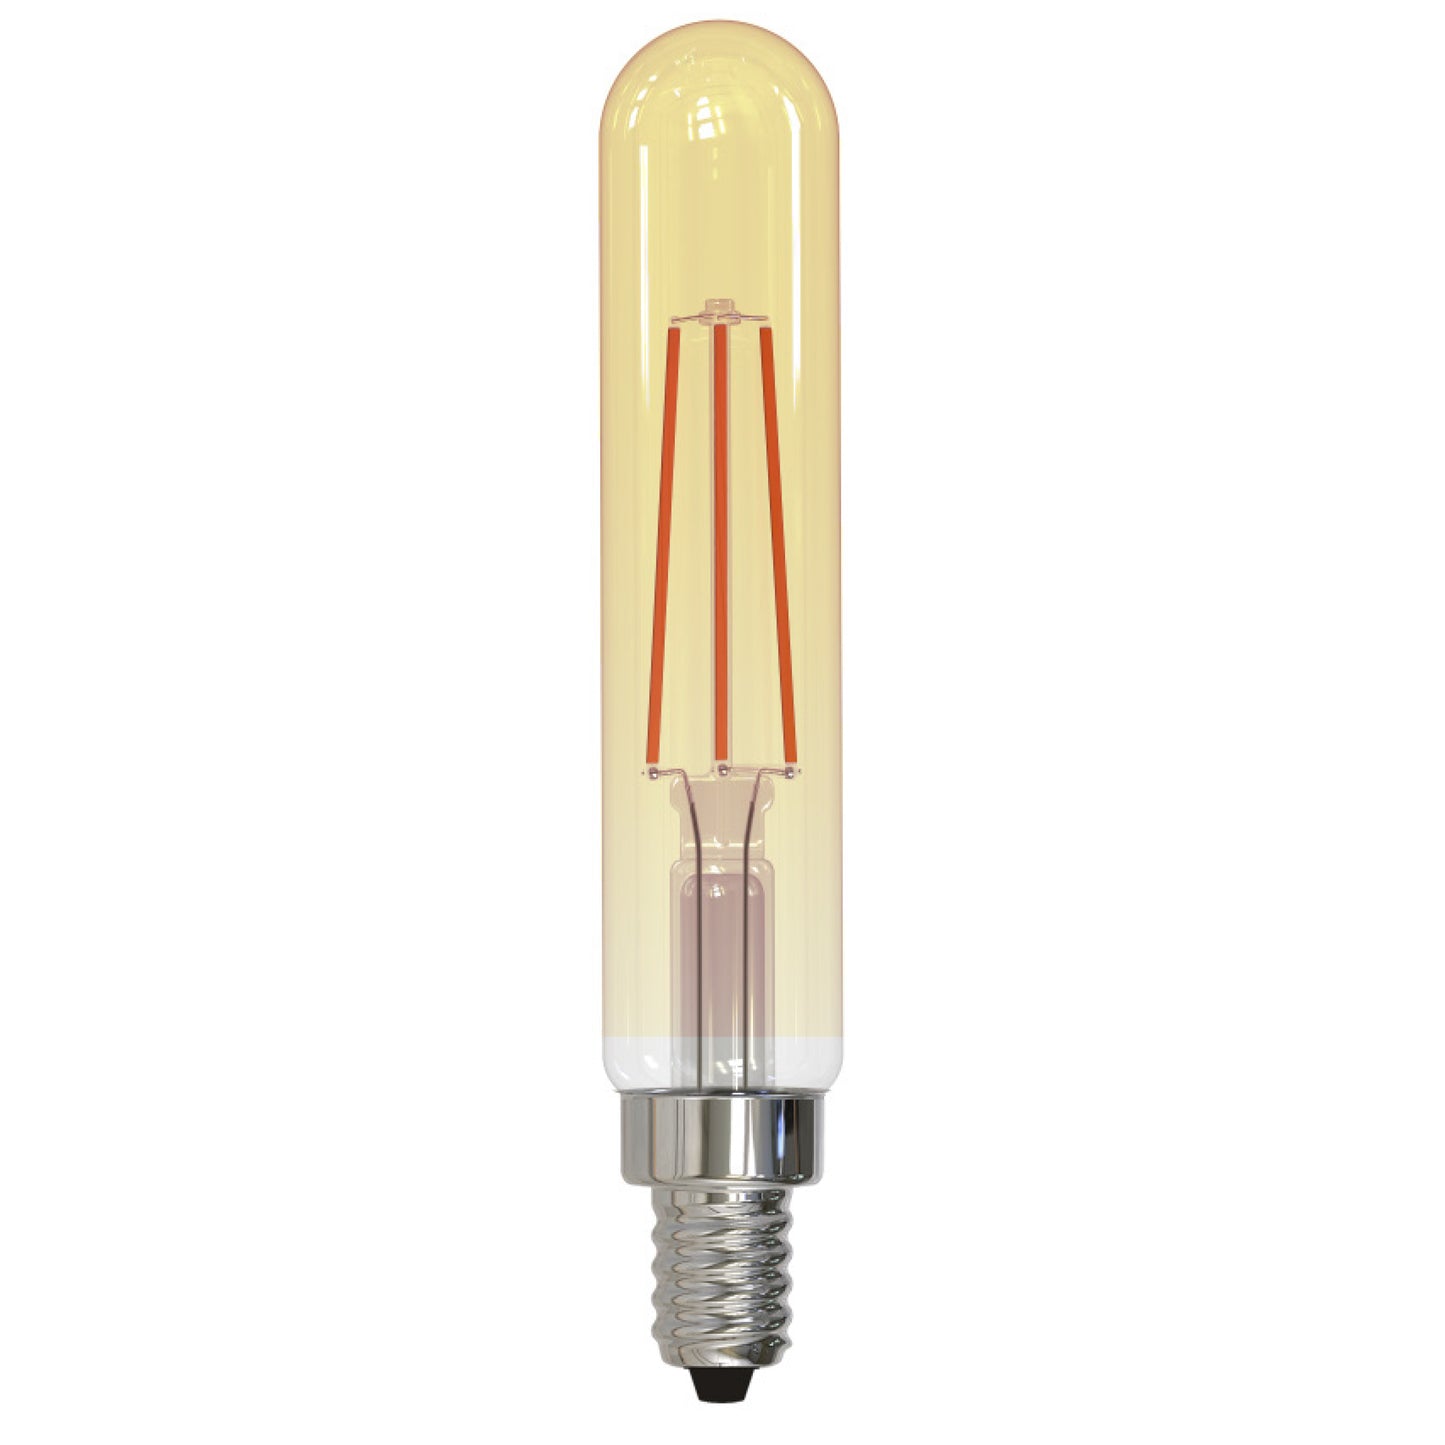 Bulbrite LED Filament 5 Watt Dimmable T8 Light Bulb with Antique Glass Finish and Candelabra (E12) Base - 2100K (Amber Light), 450 Lumens